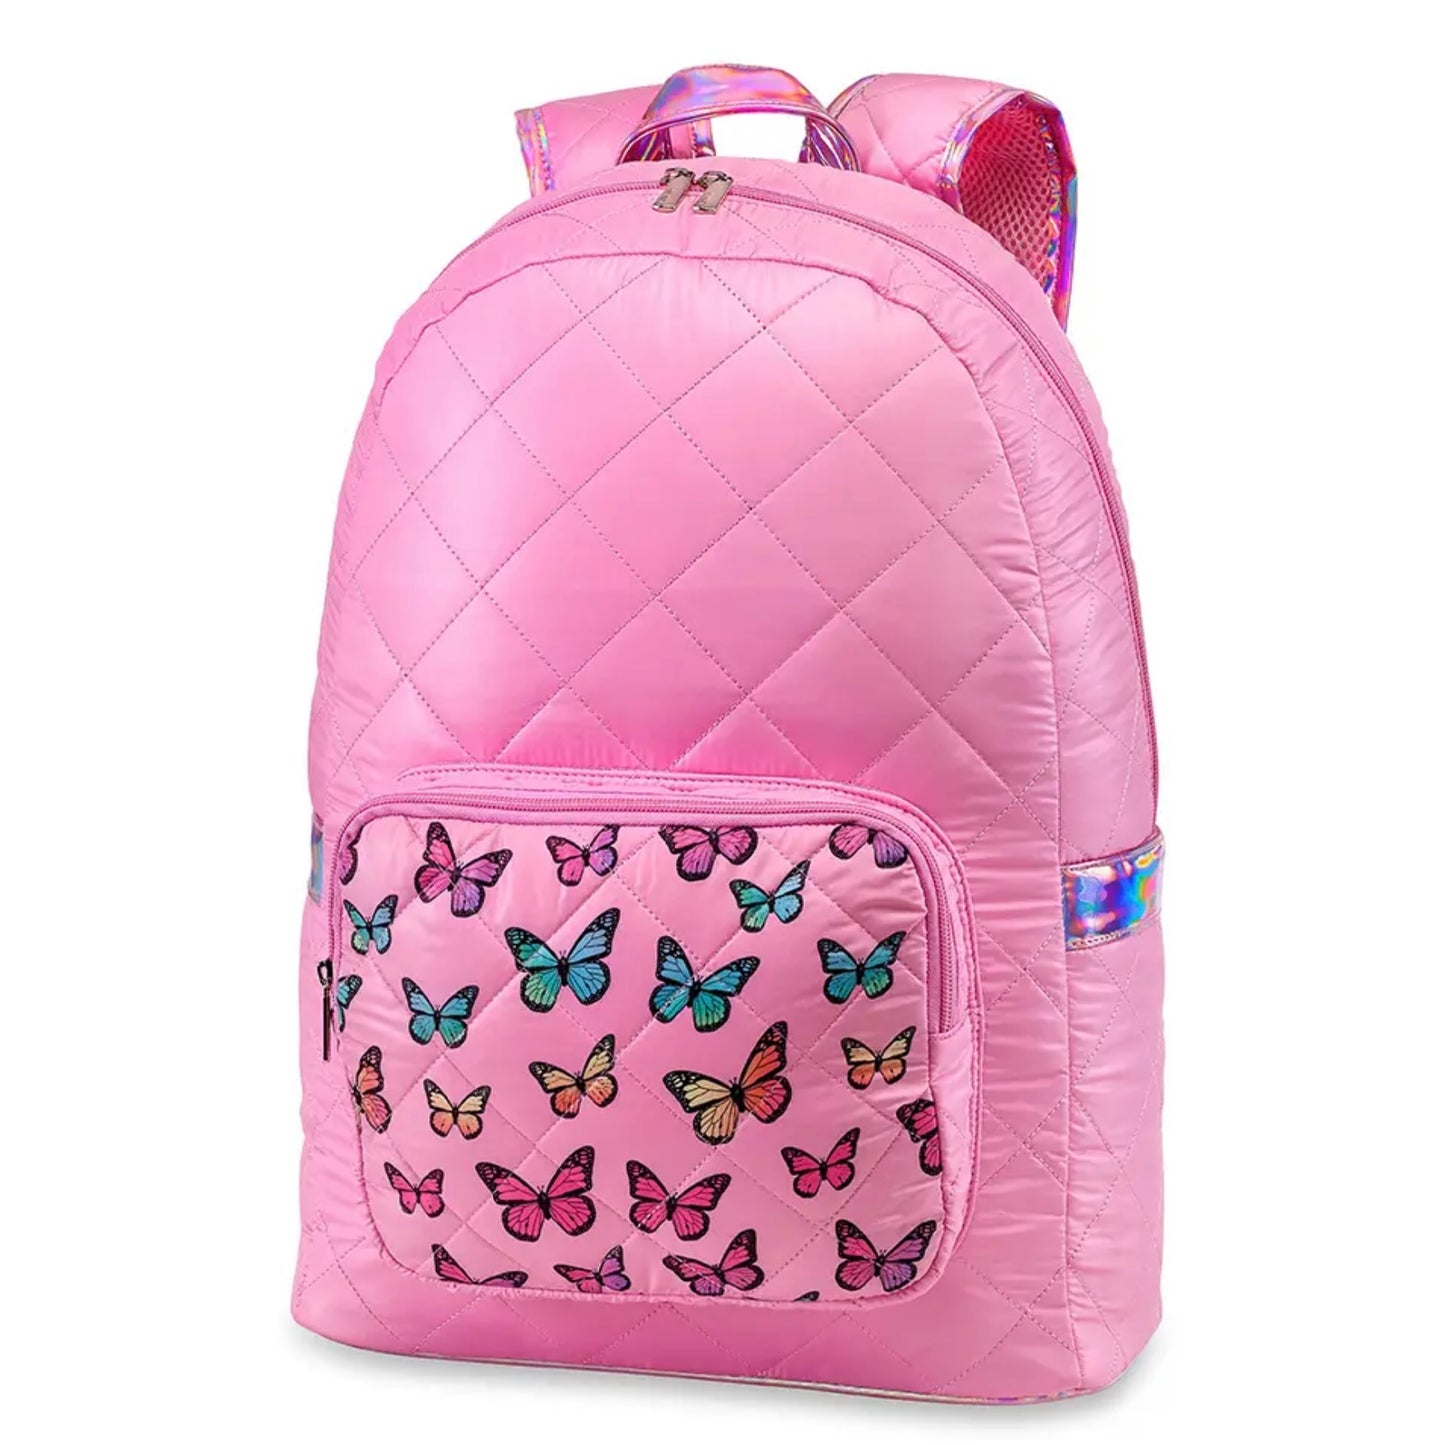 Top Trenz Pink Diamond Stitch Puffer Backpack w/Butterfly Pocket